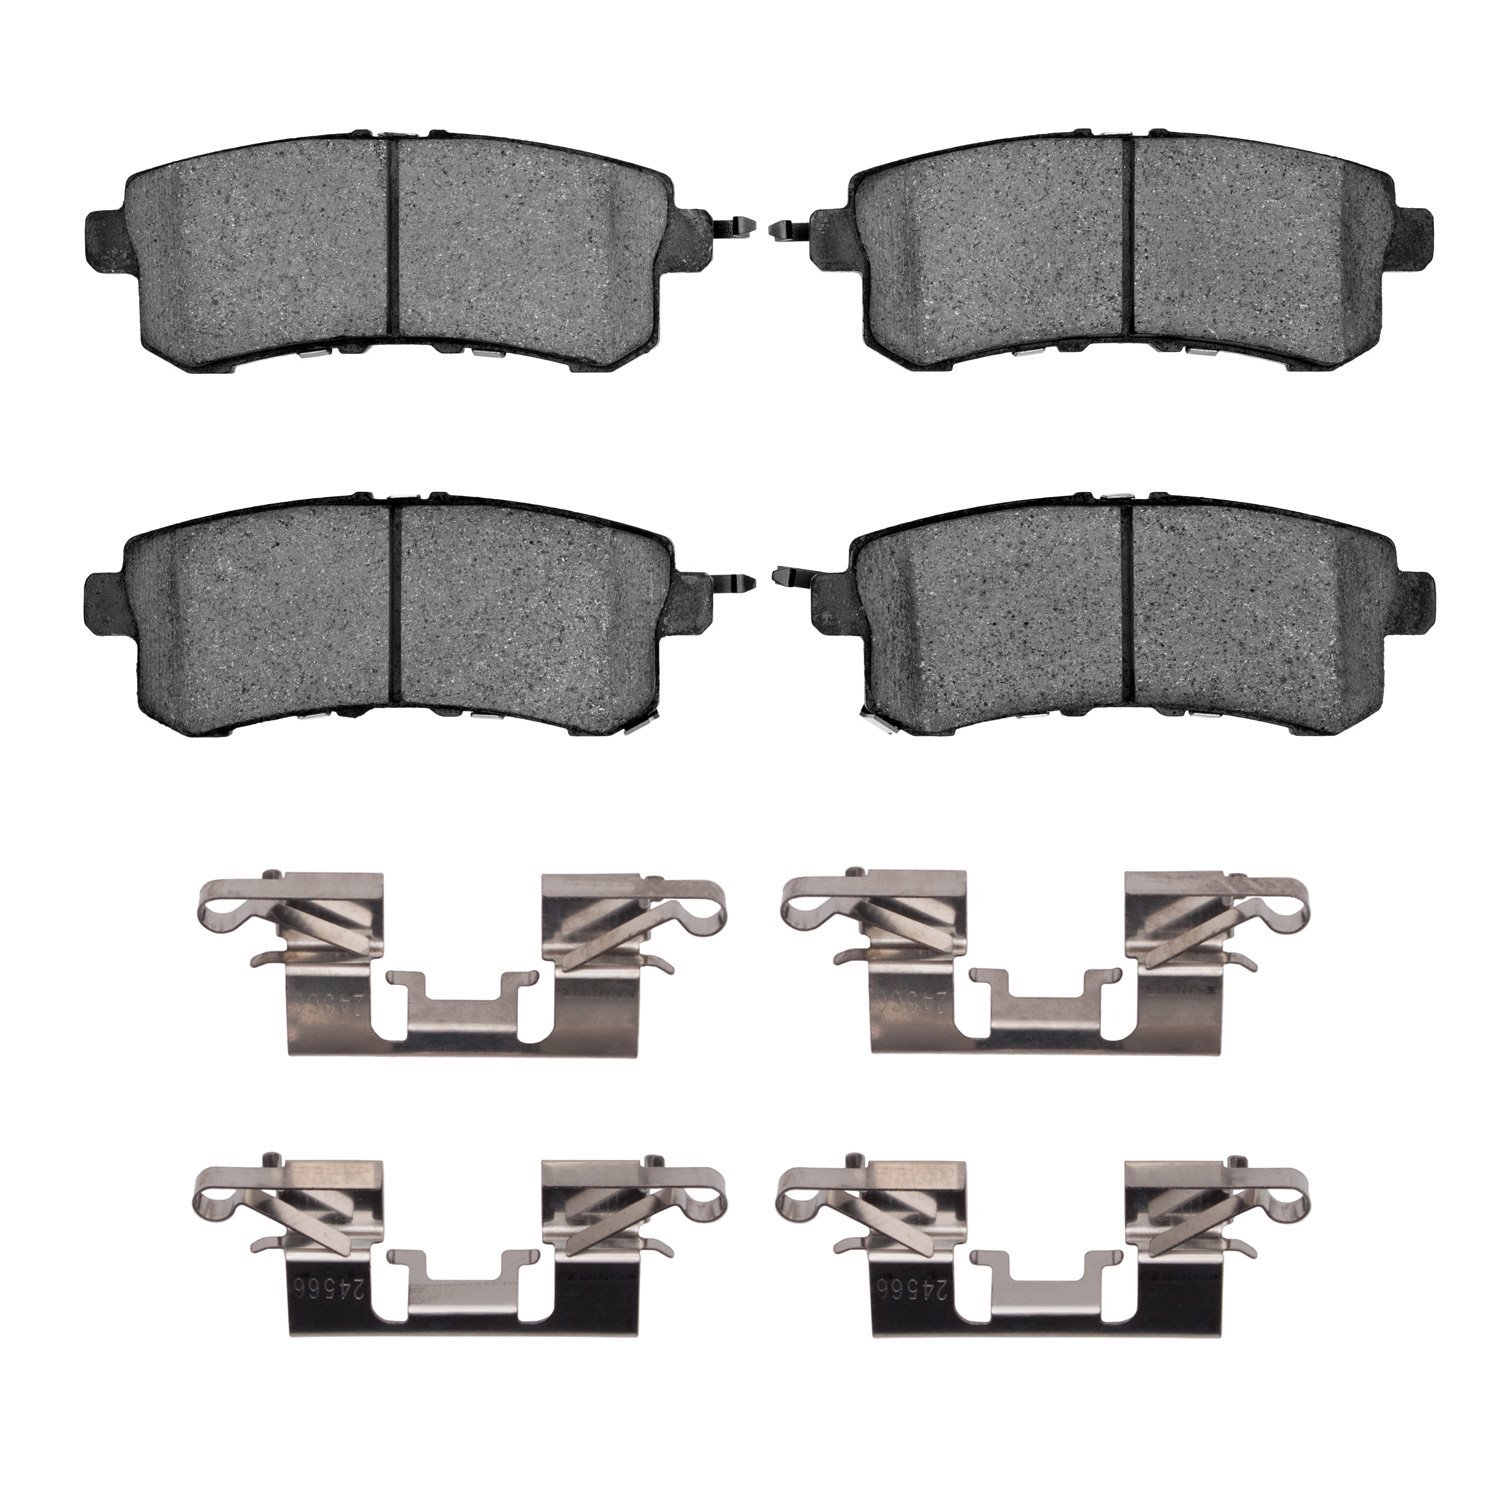 1551-1510-01 5000 Advanced Ceramic Brake Pads & Hardware Kit, Fits Select Infiniti/Nissan, Position: Rear